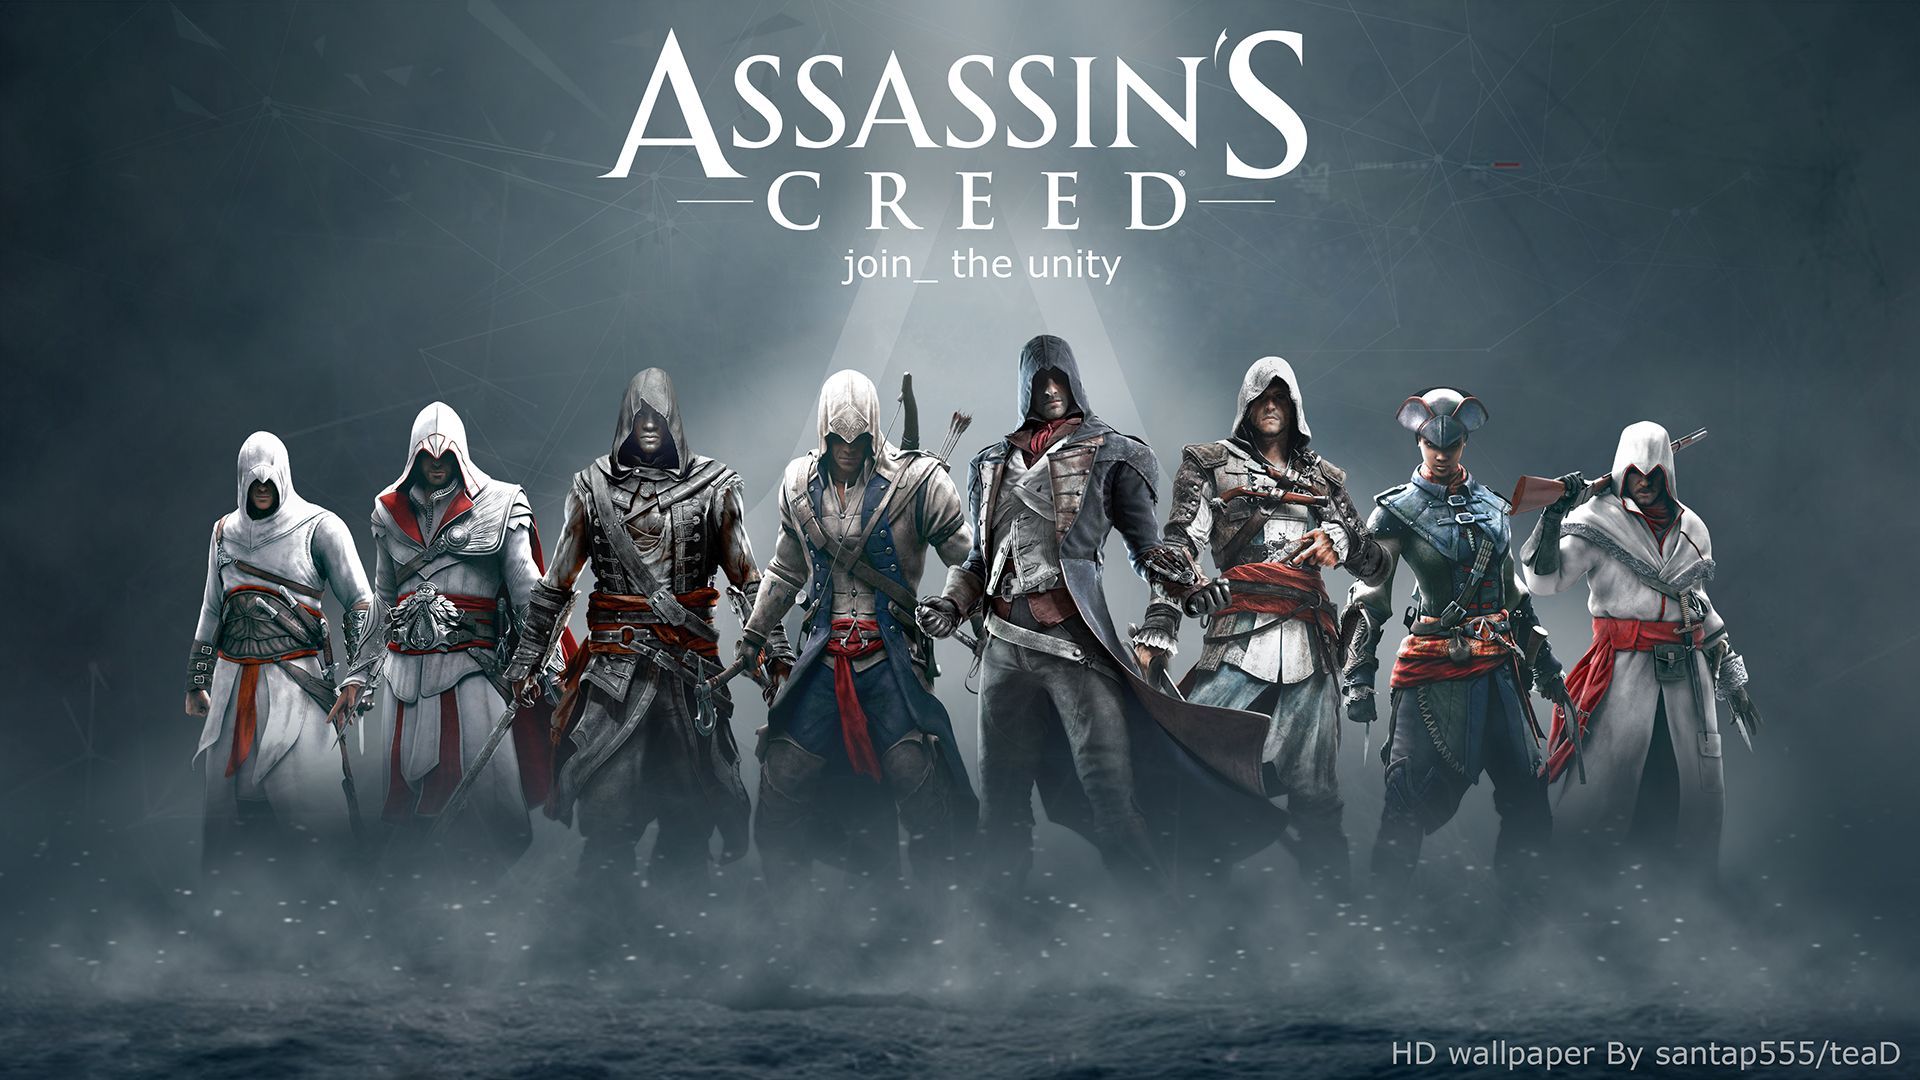 Assassin's Creed HD wallpaper by teaD by santap555 on DeviantArt